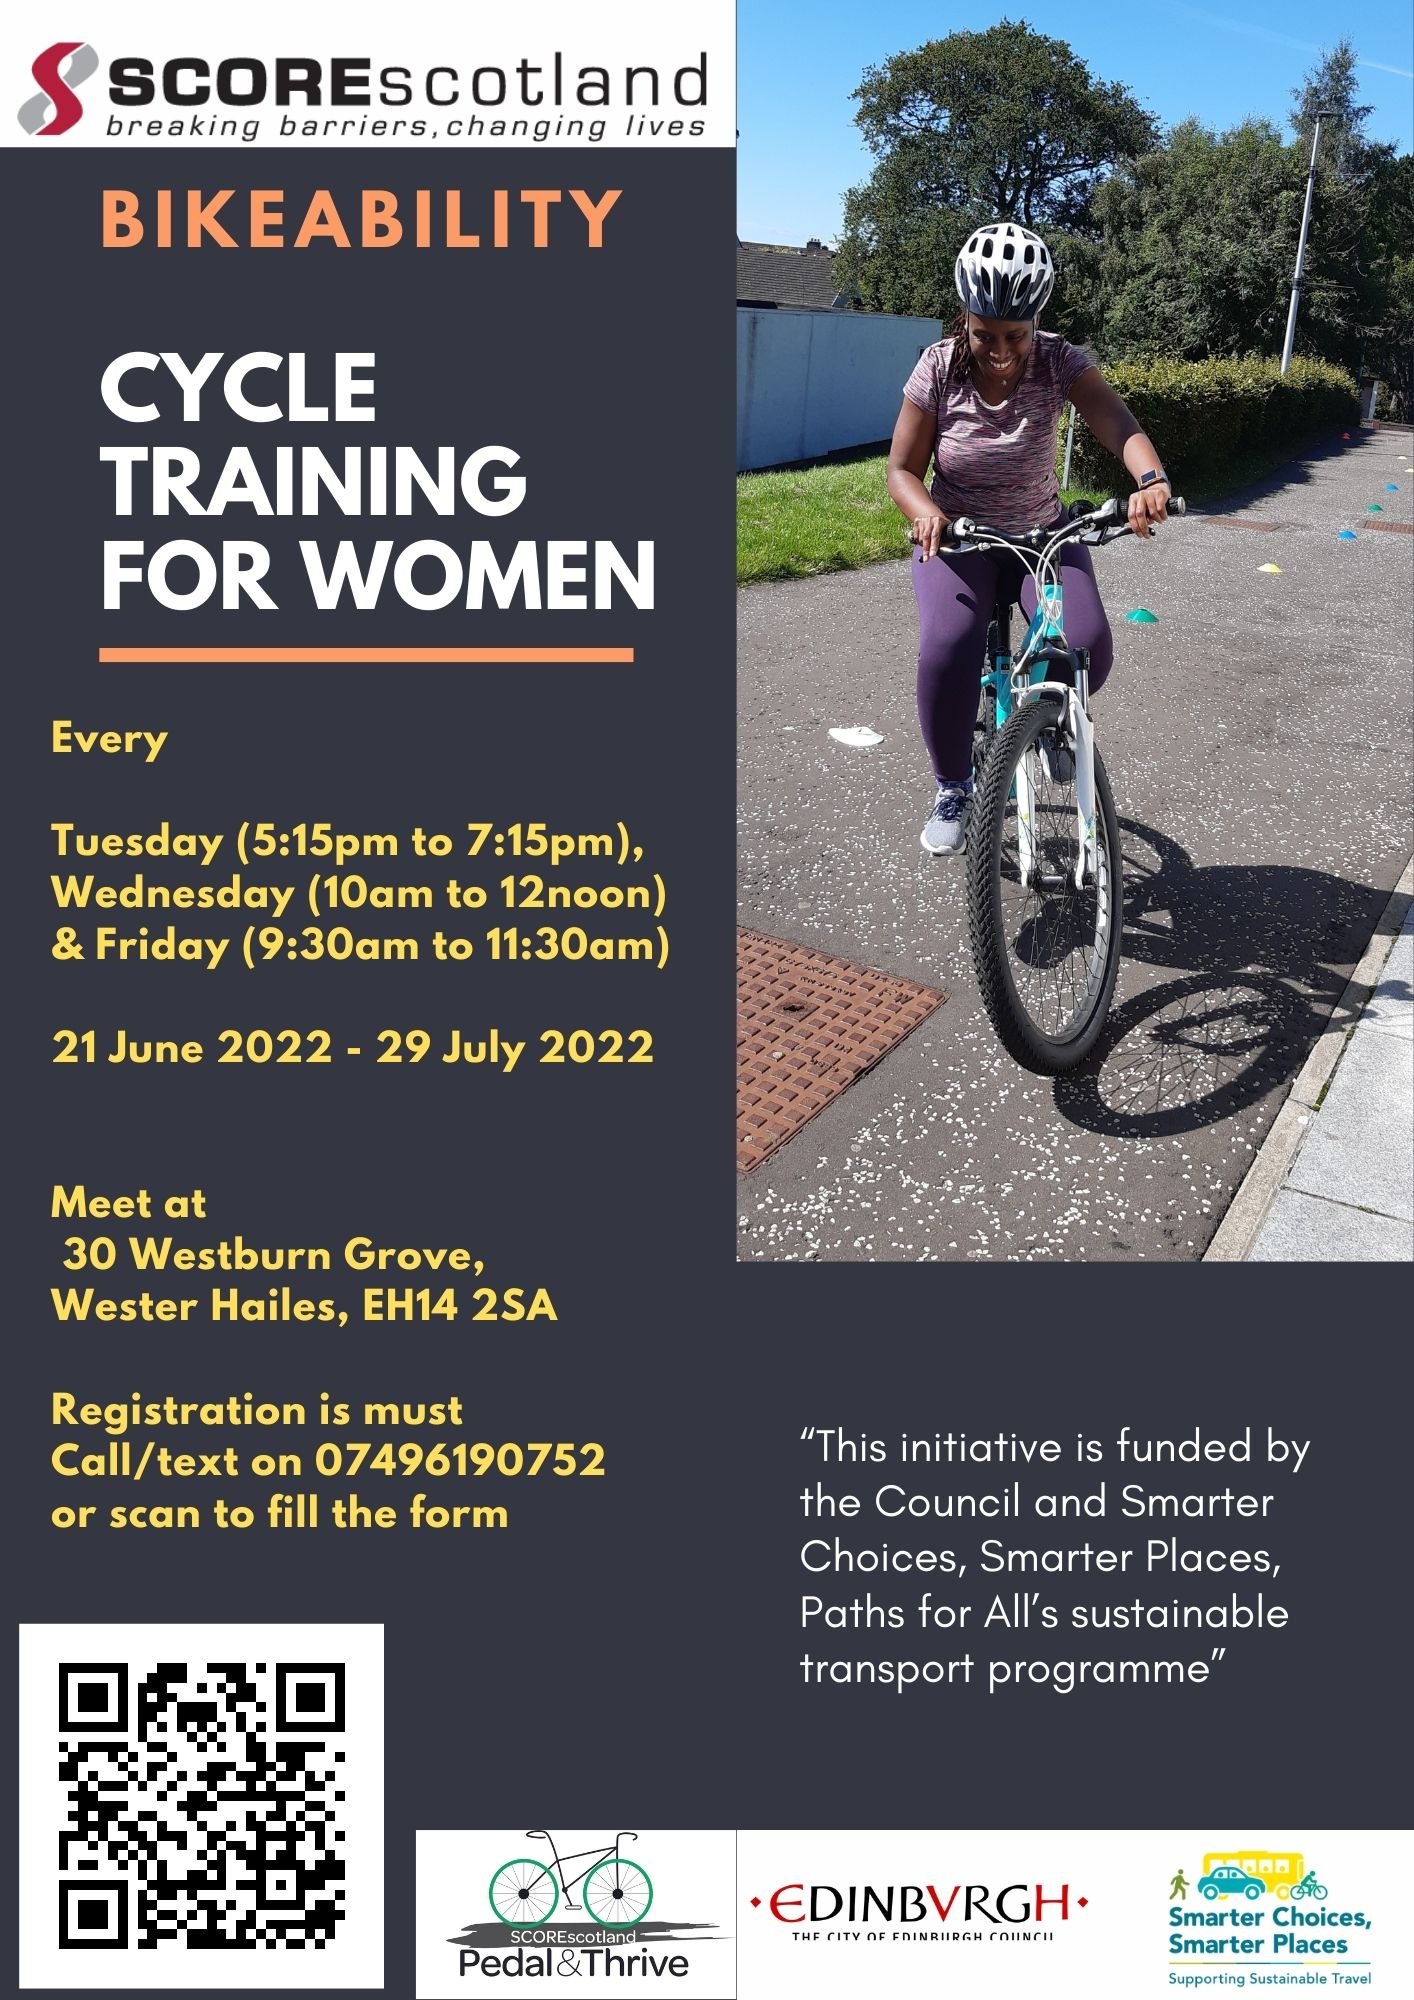 SCOREscotland-Women-Cycling-Poster Featured Image